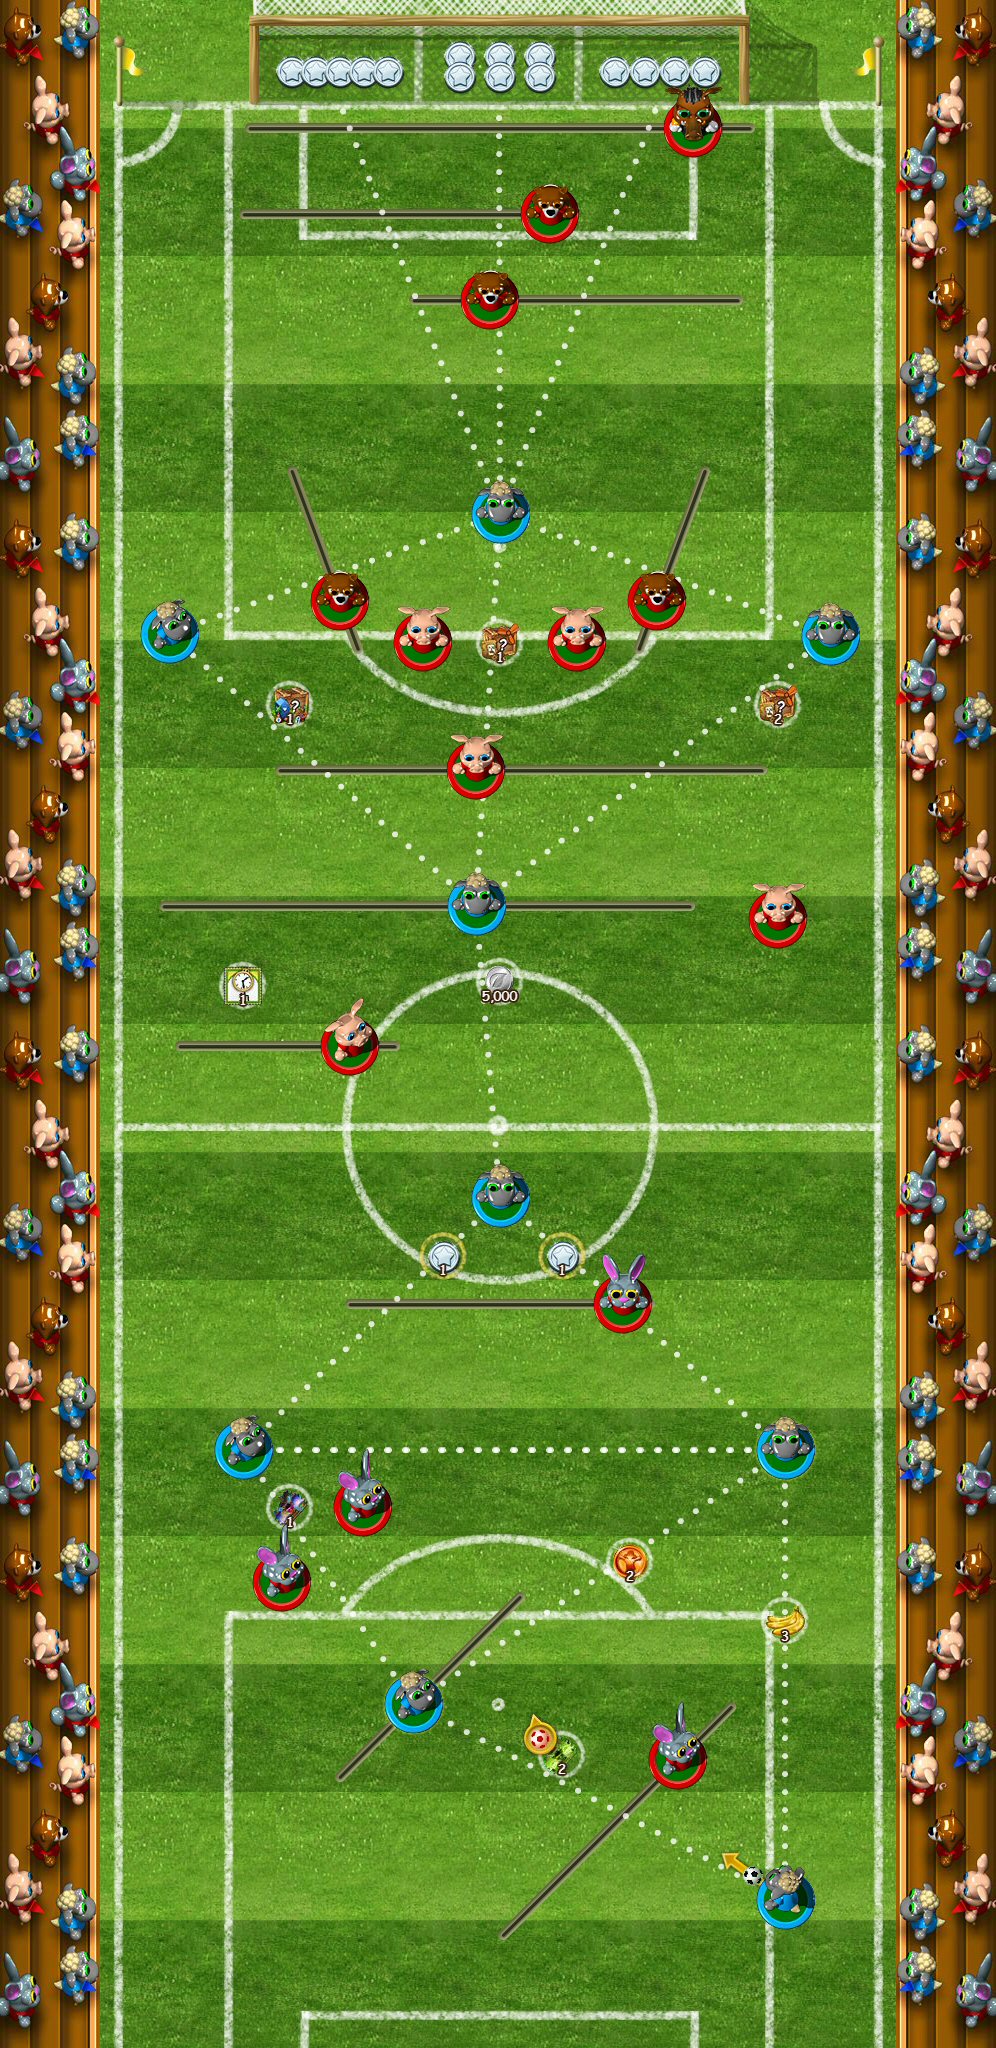 soccerjul2019_layout7.jpg